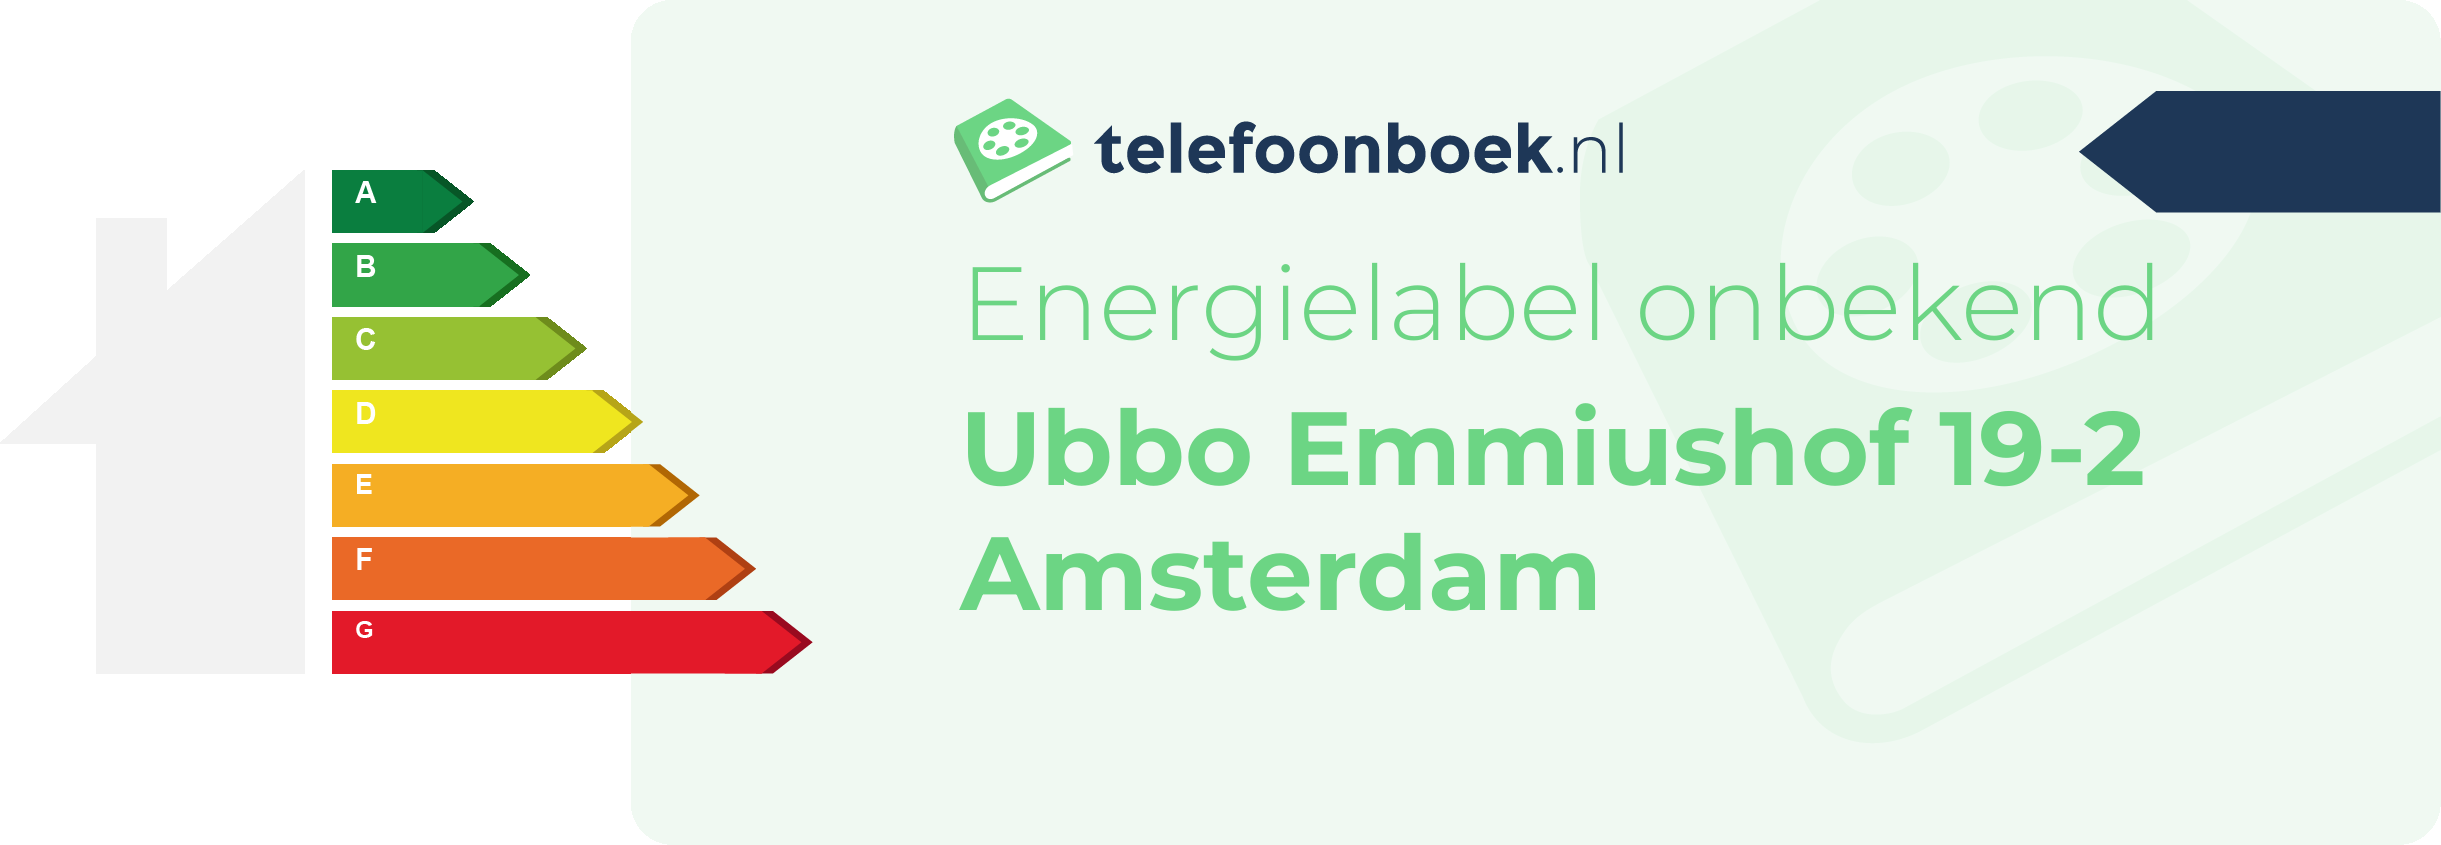 Energielabel Ubbo Emmiushof 19-2 Amsterdam